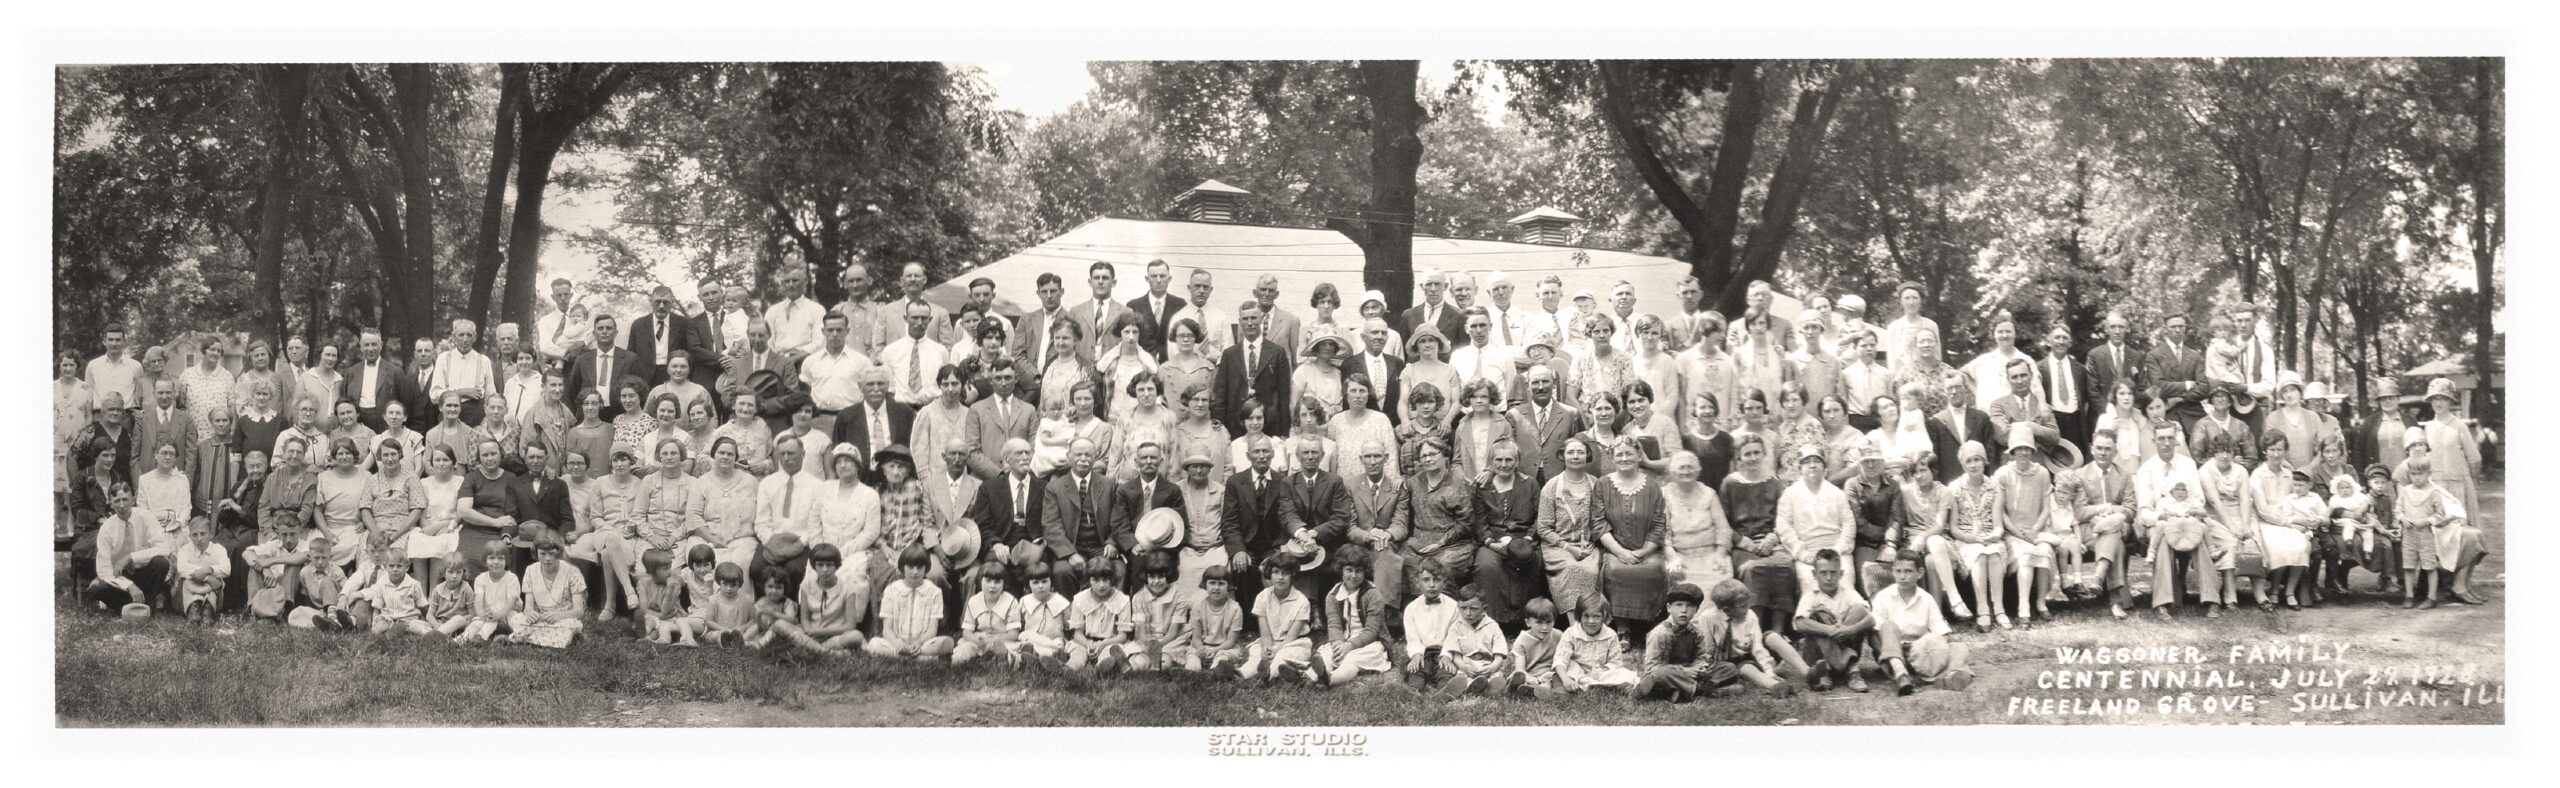 Waggoner Reunion 1928